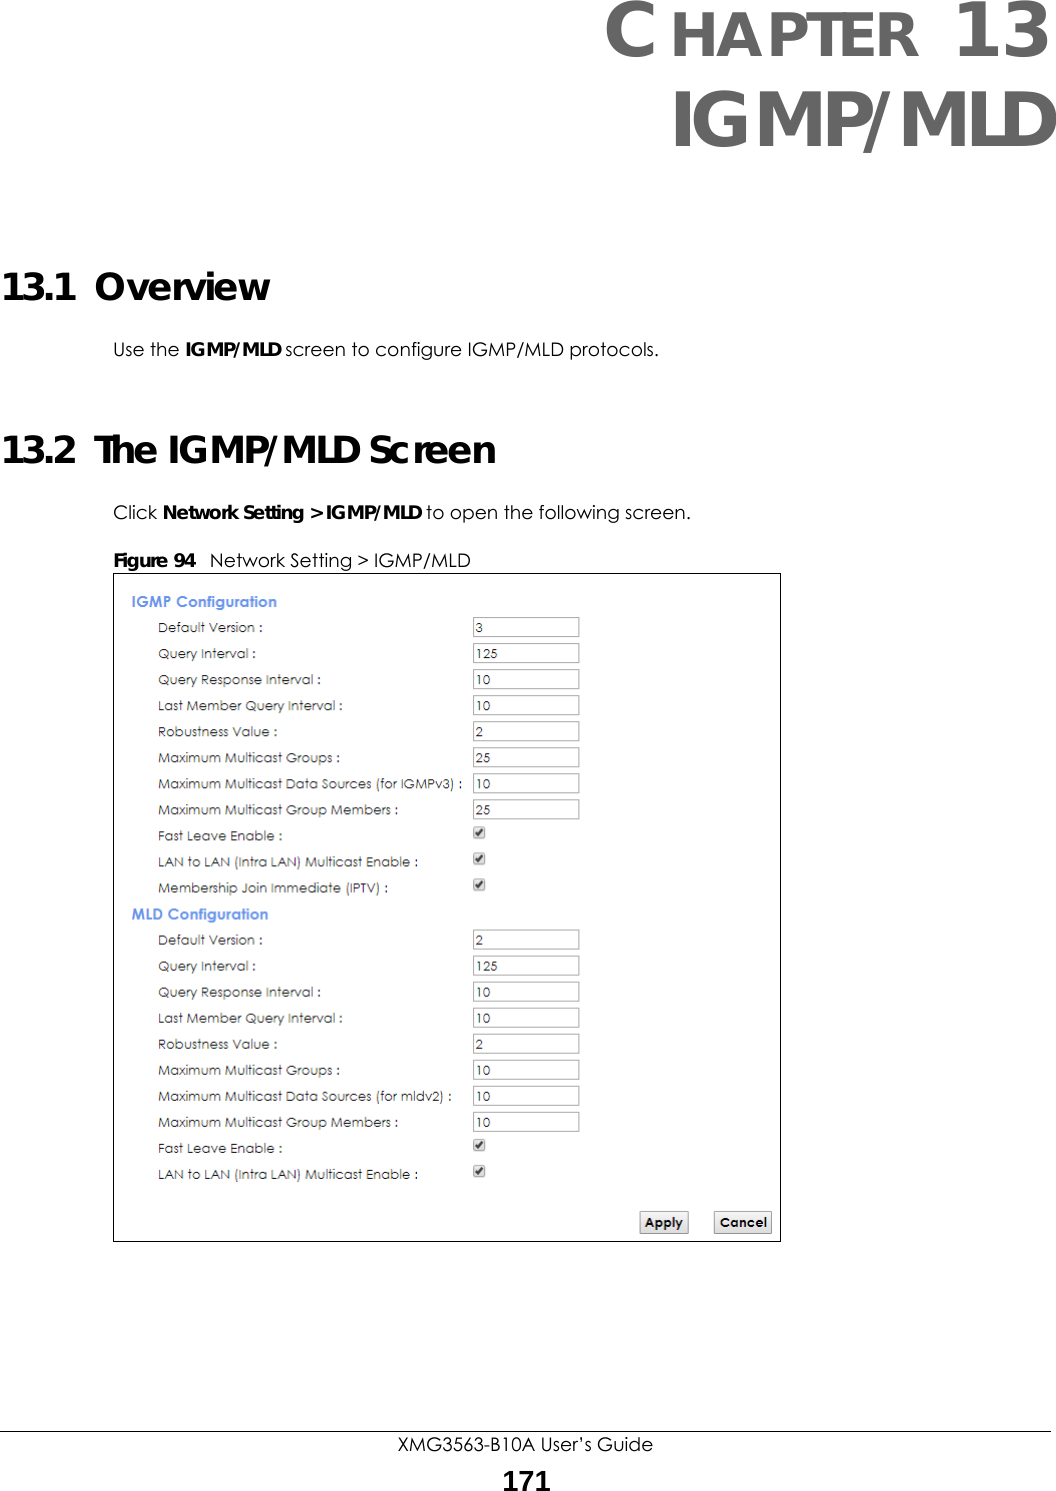 XMG3563-B10A User’s Guide171CHAPTER 13IGMP/MLD13.1  Overview Use the IGMP/MLD screen to configure IGMP/MLD protocols.13.2  The IGMP/MLD ScreenClick Network Setting &gt; IGMP/MLD to open the following screen.Figure 94   Network Setting &gt; IGMP/MLD